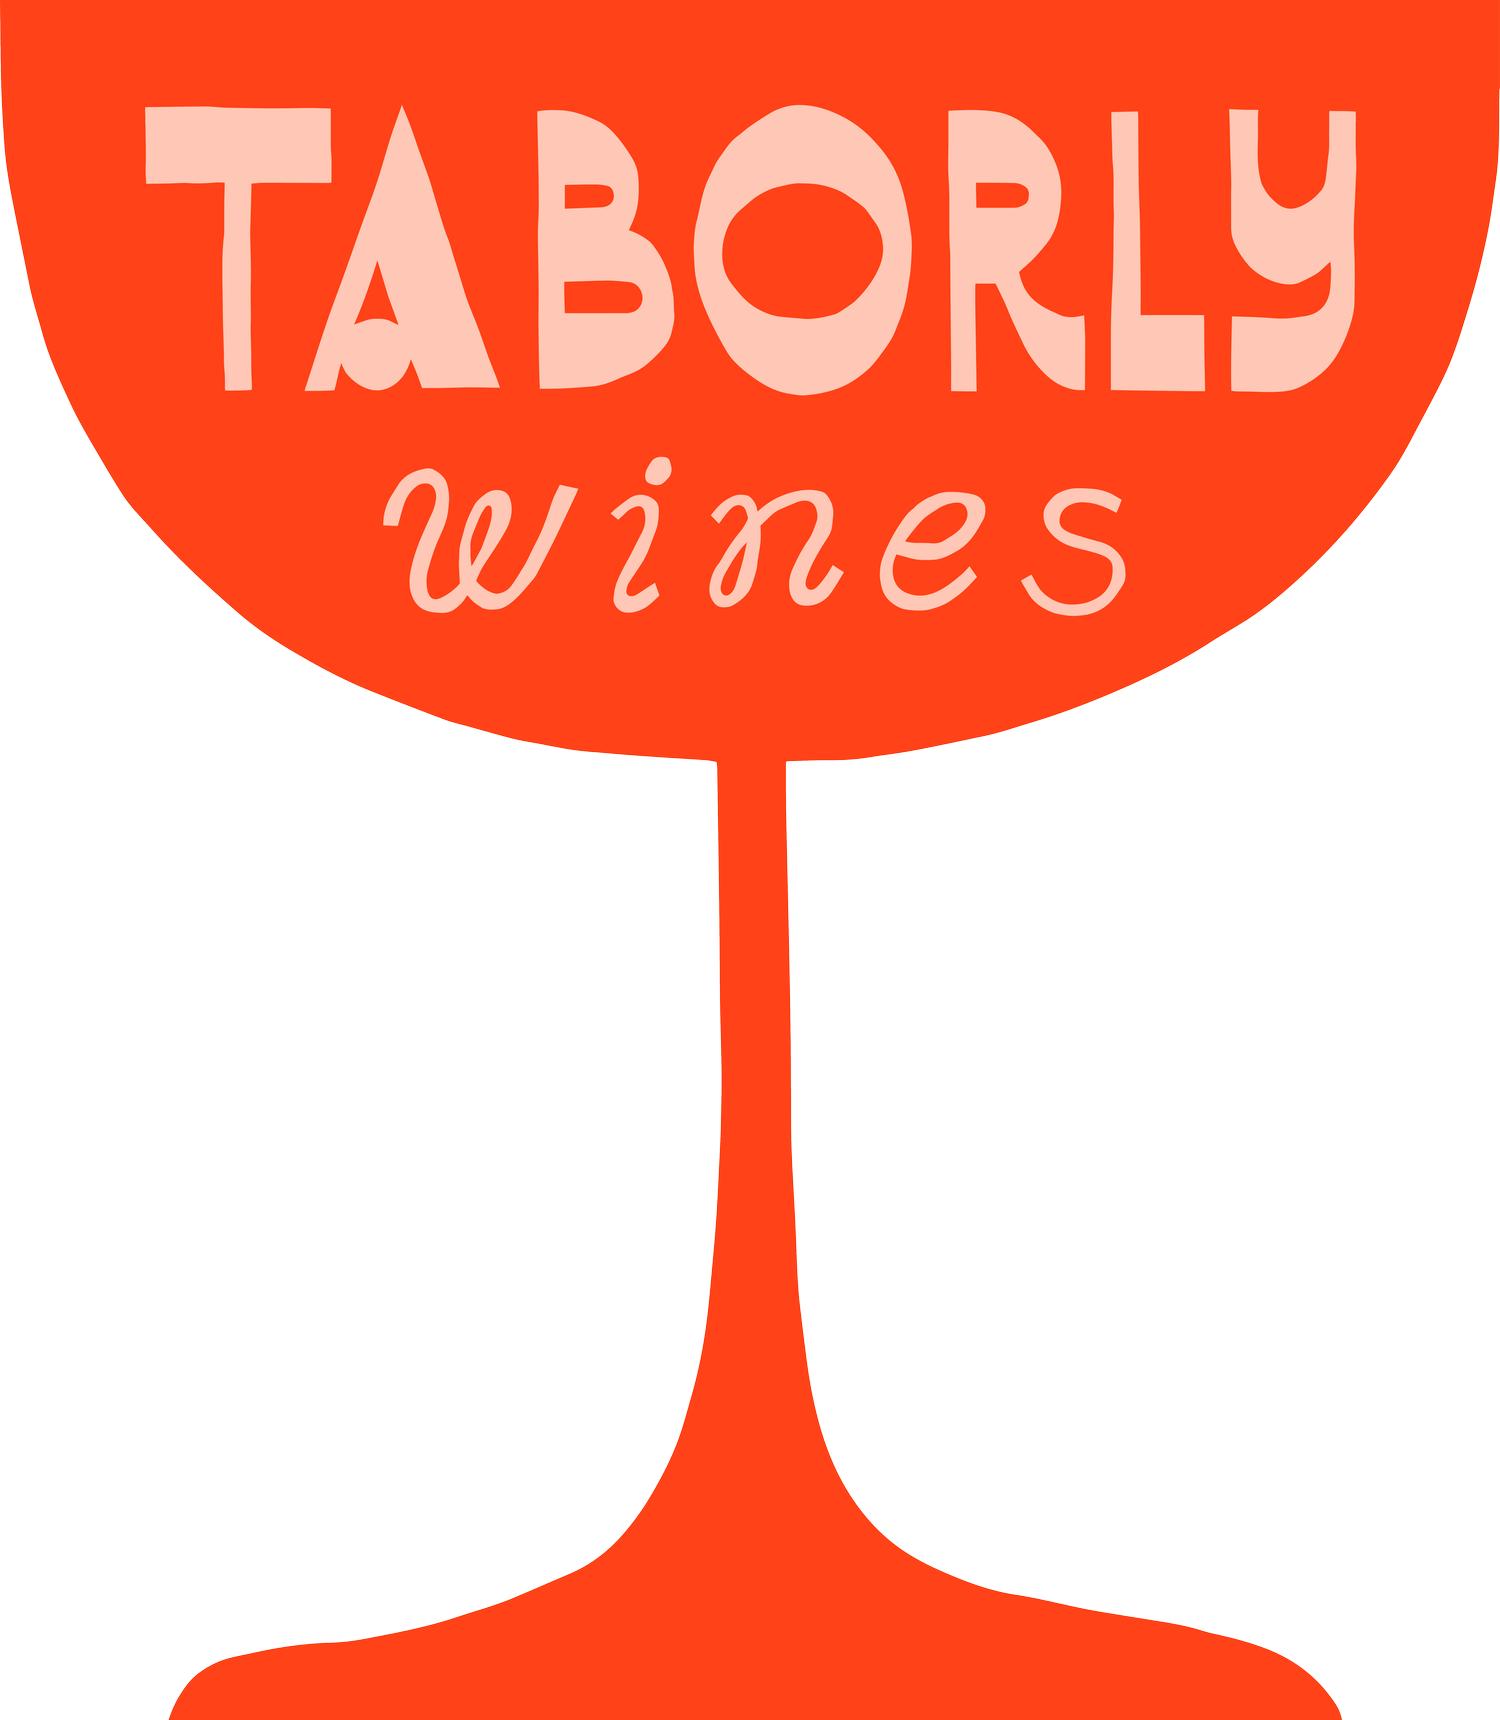 Taborly Wines